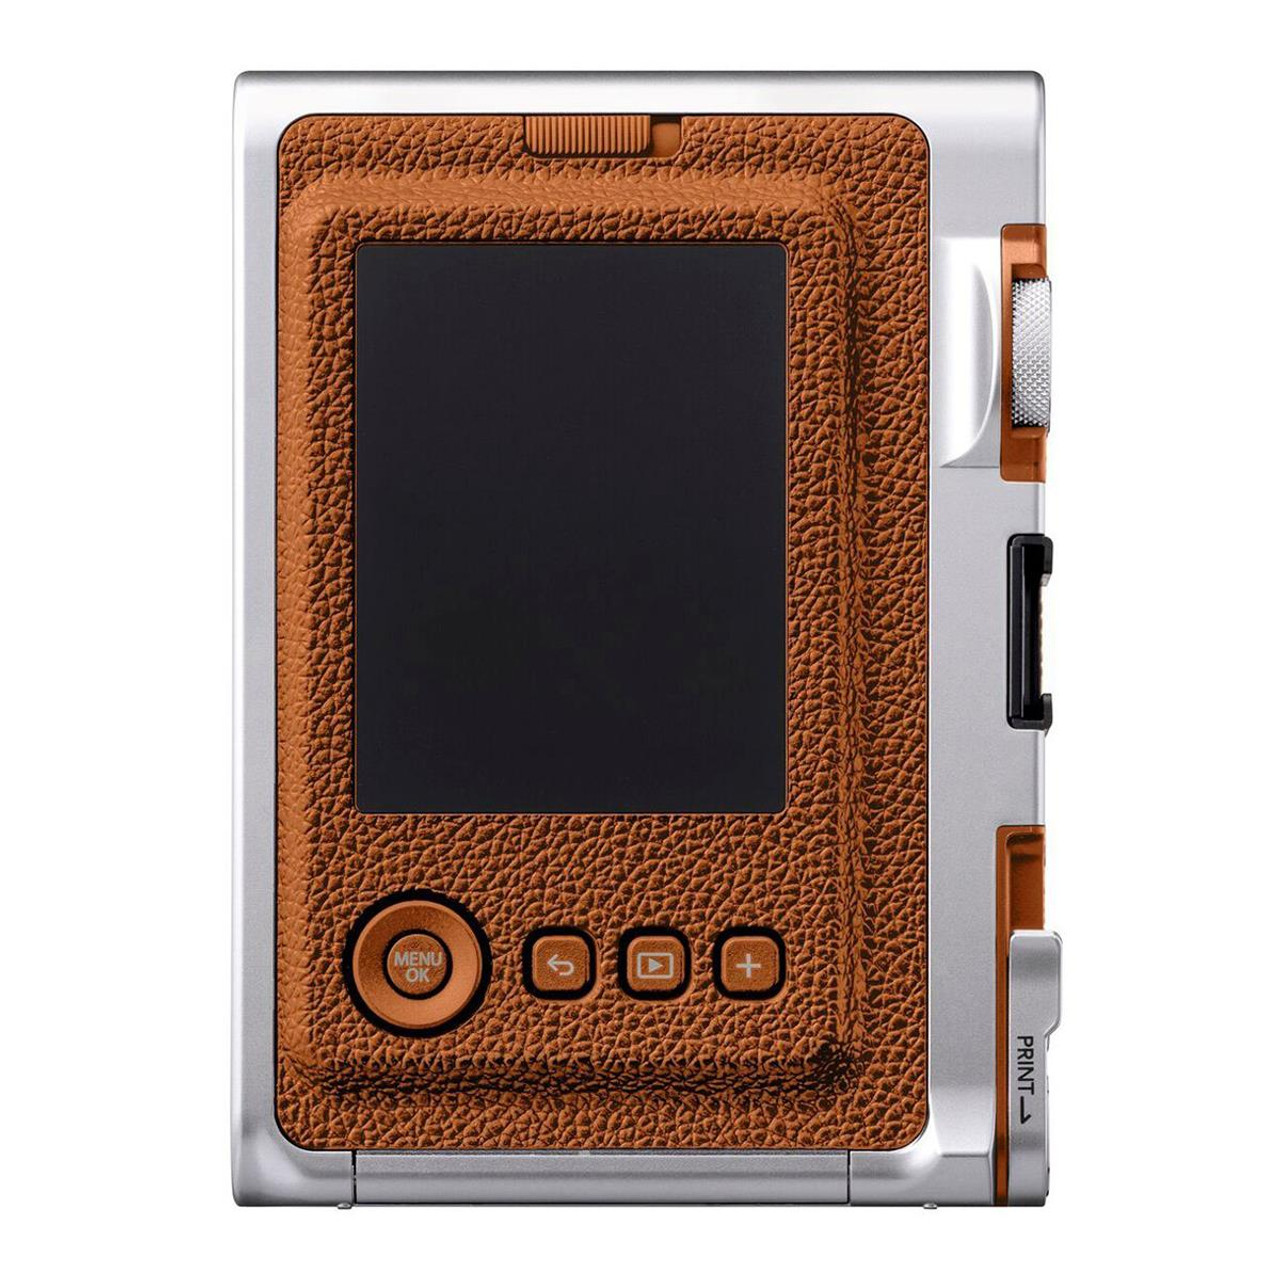 EVO FUJIFILM MINI (Brown) Camera Instant (74101208467) Hybrid INSTAX